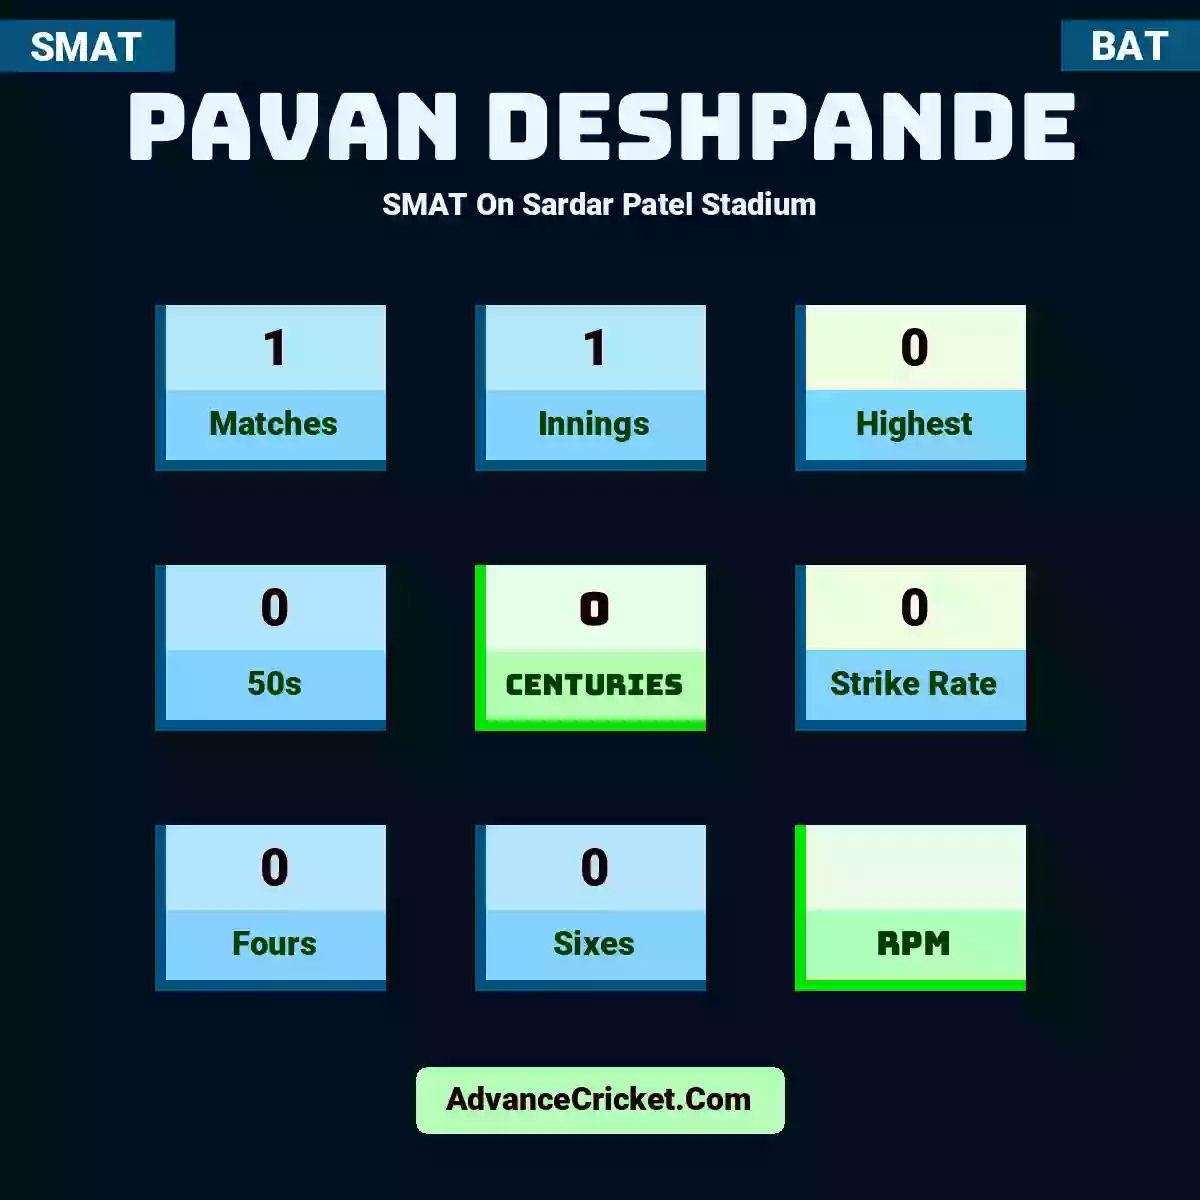 Pavan Deshpande SMAT  On Sardar Patel Stadium, Pavan Deshpande played 1 matches, scored 0 runs as highest, 0 half-centuries, and 0 centuries, with a strike rate of 0. P.Deshpande hit 0 fours and 0 sixes.